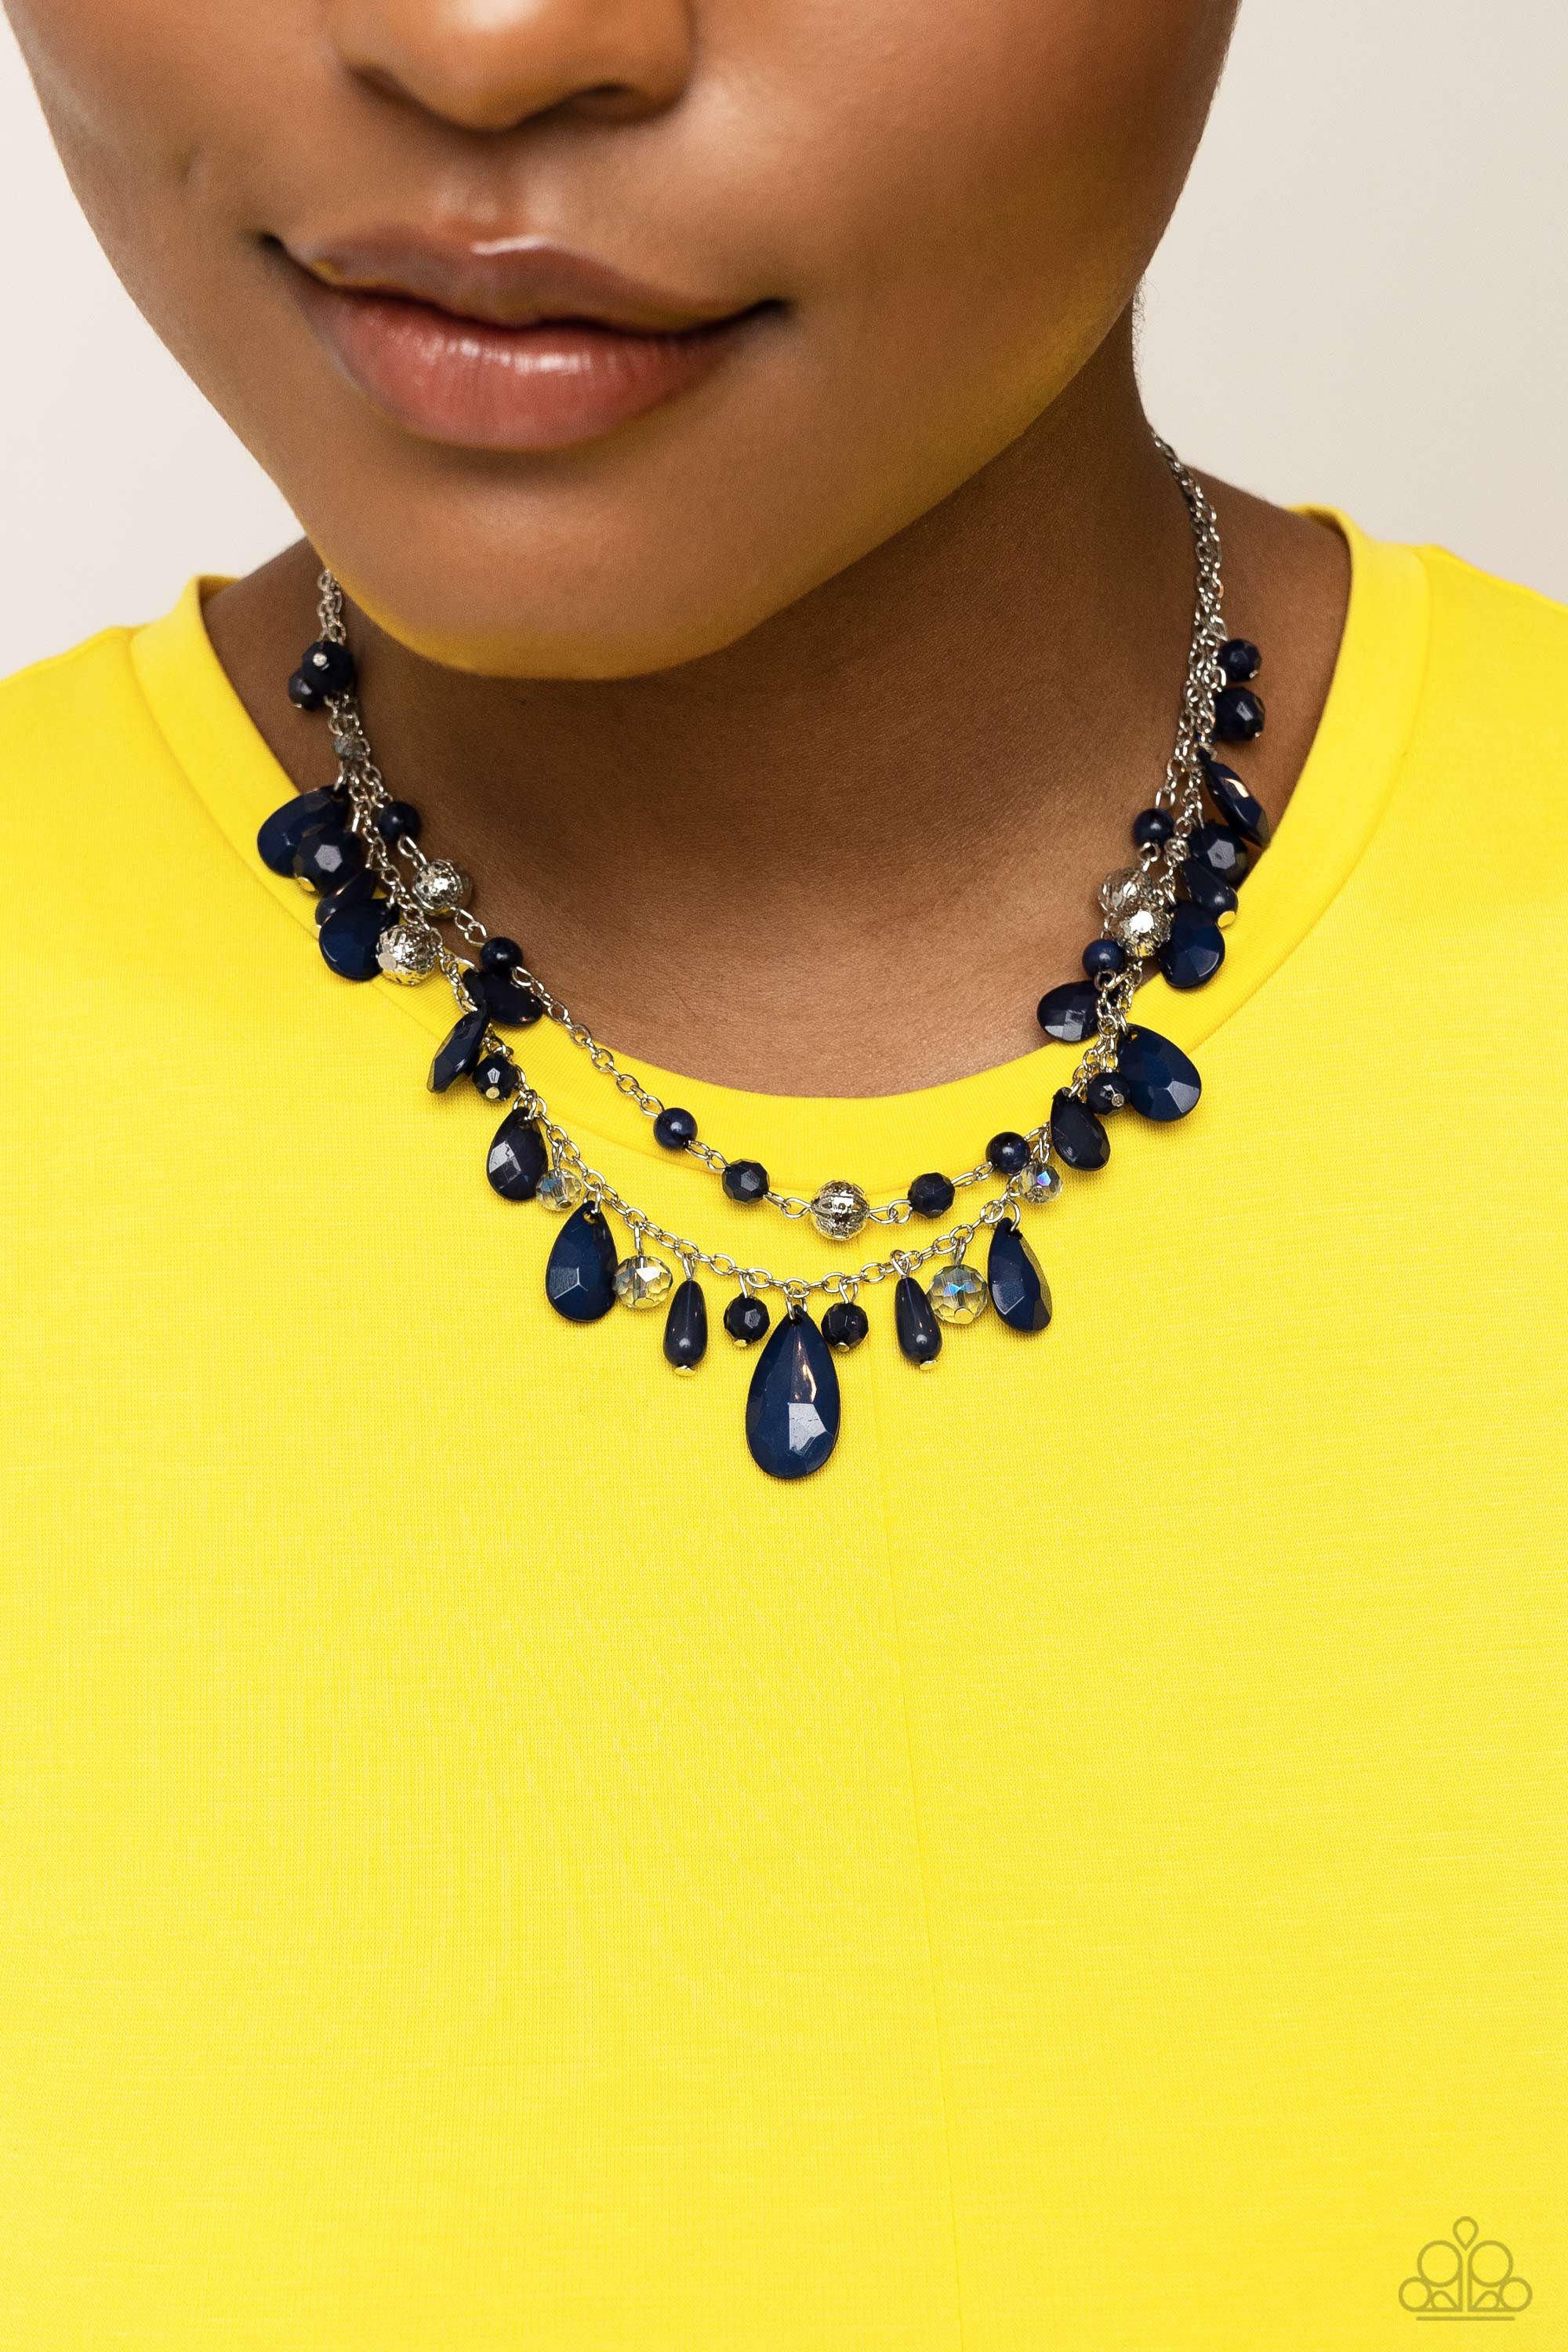 Flirty Flood Blue Necklace - Paparazzi Accessories- lightbox - CarasShop.com - $5 Jewelry by Cara Jewels